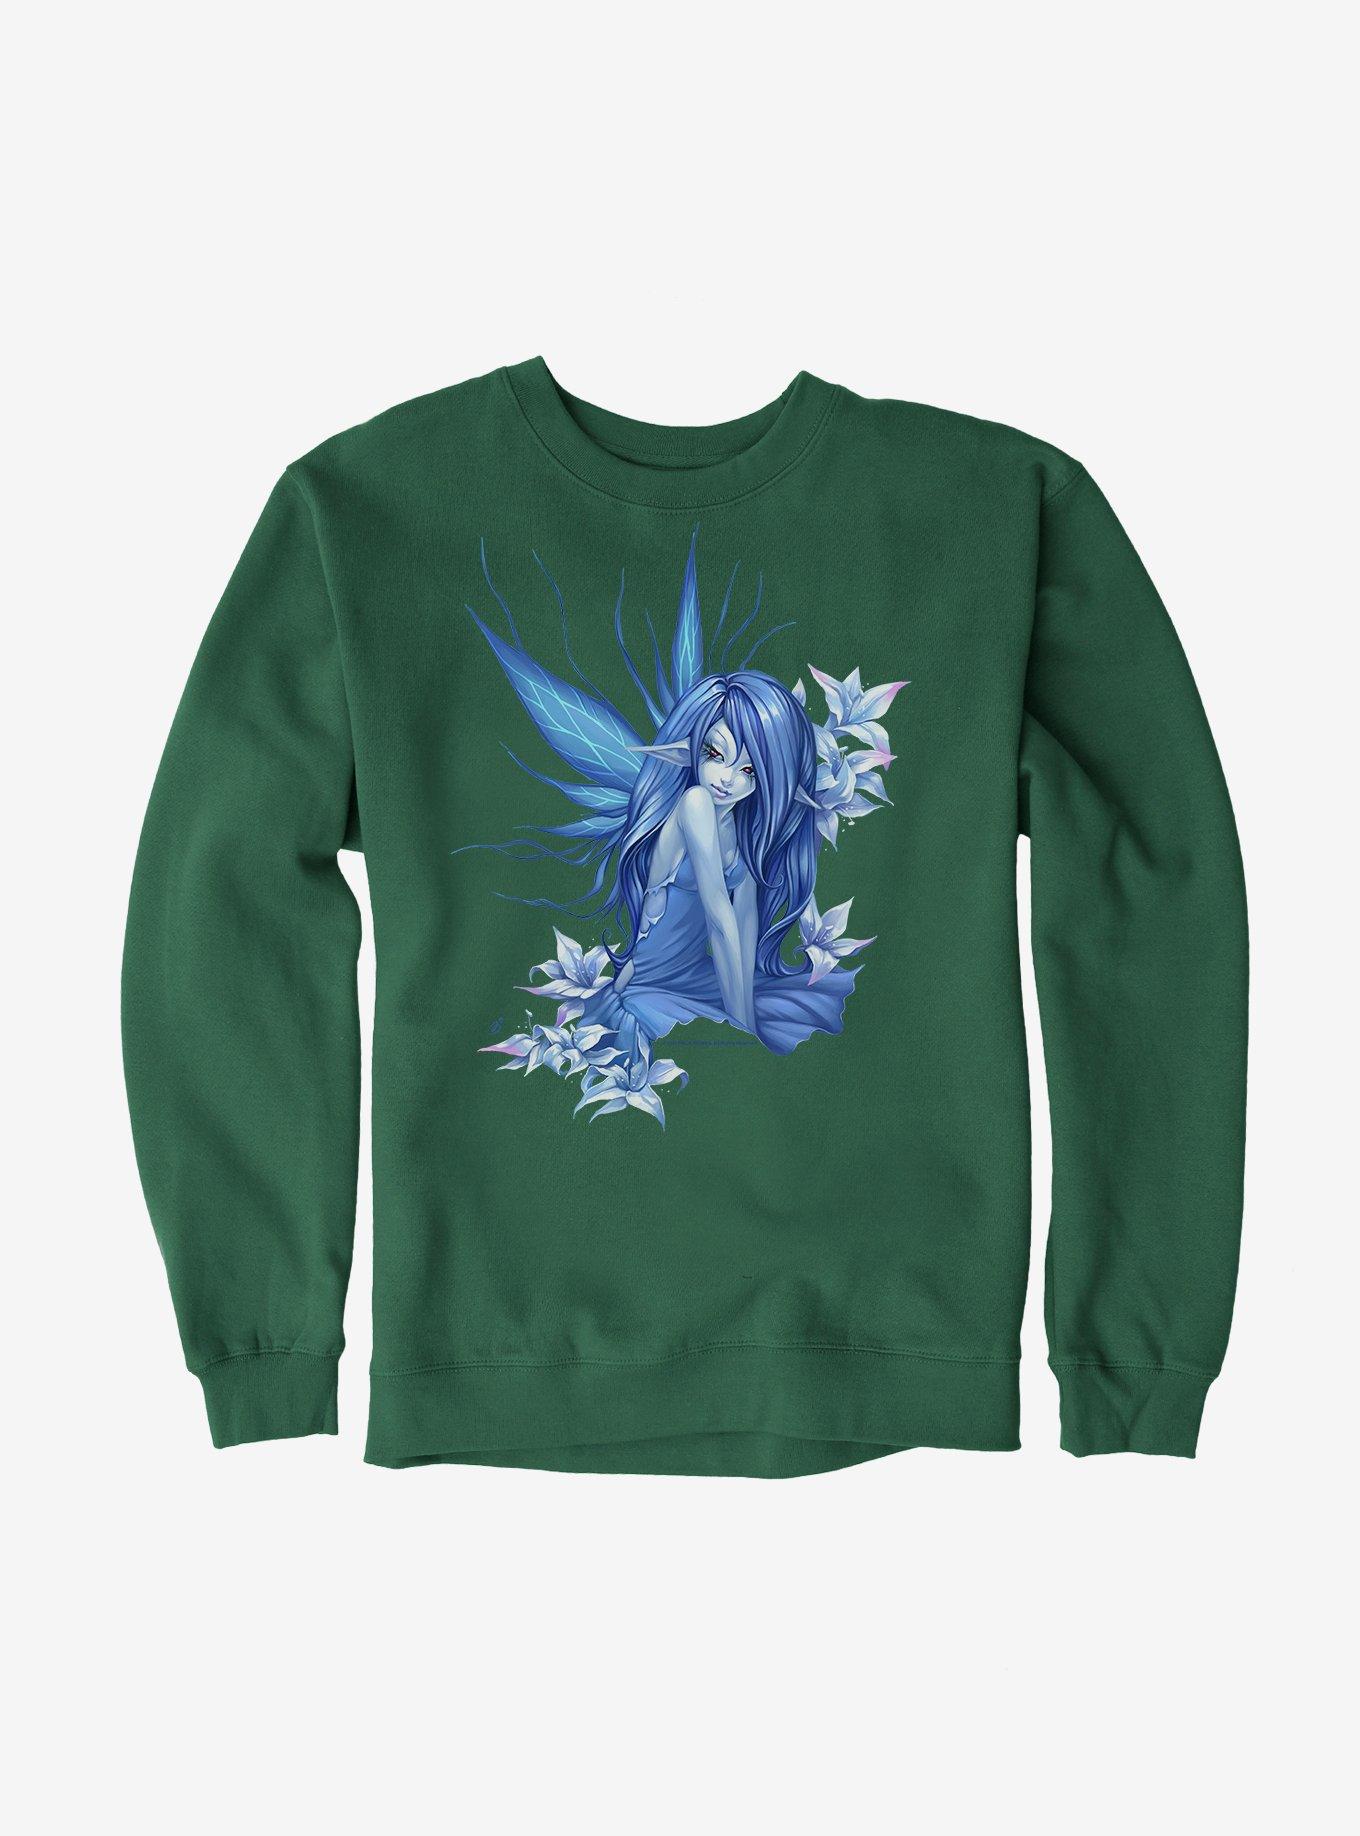 Fairies By Trick Blue Wing Sweatshirt